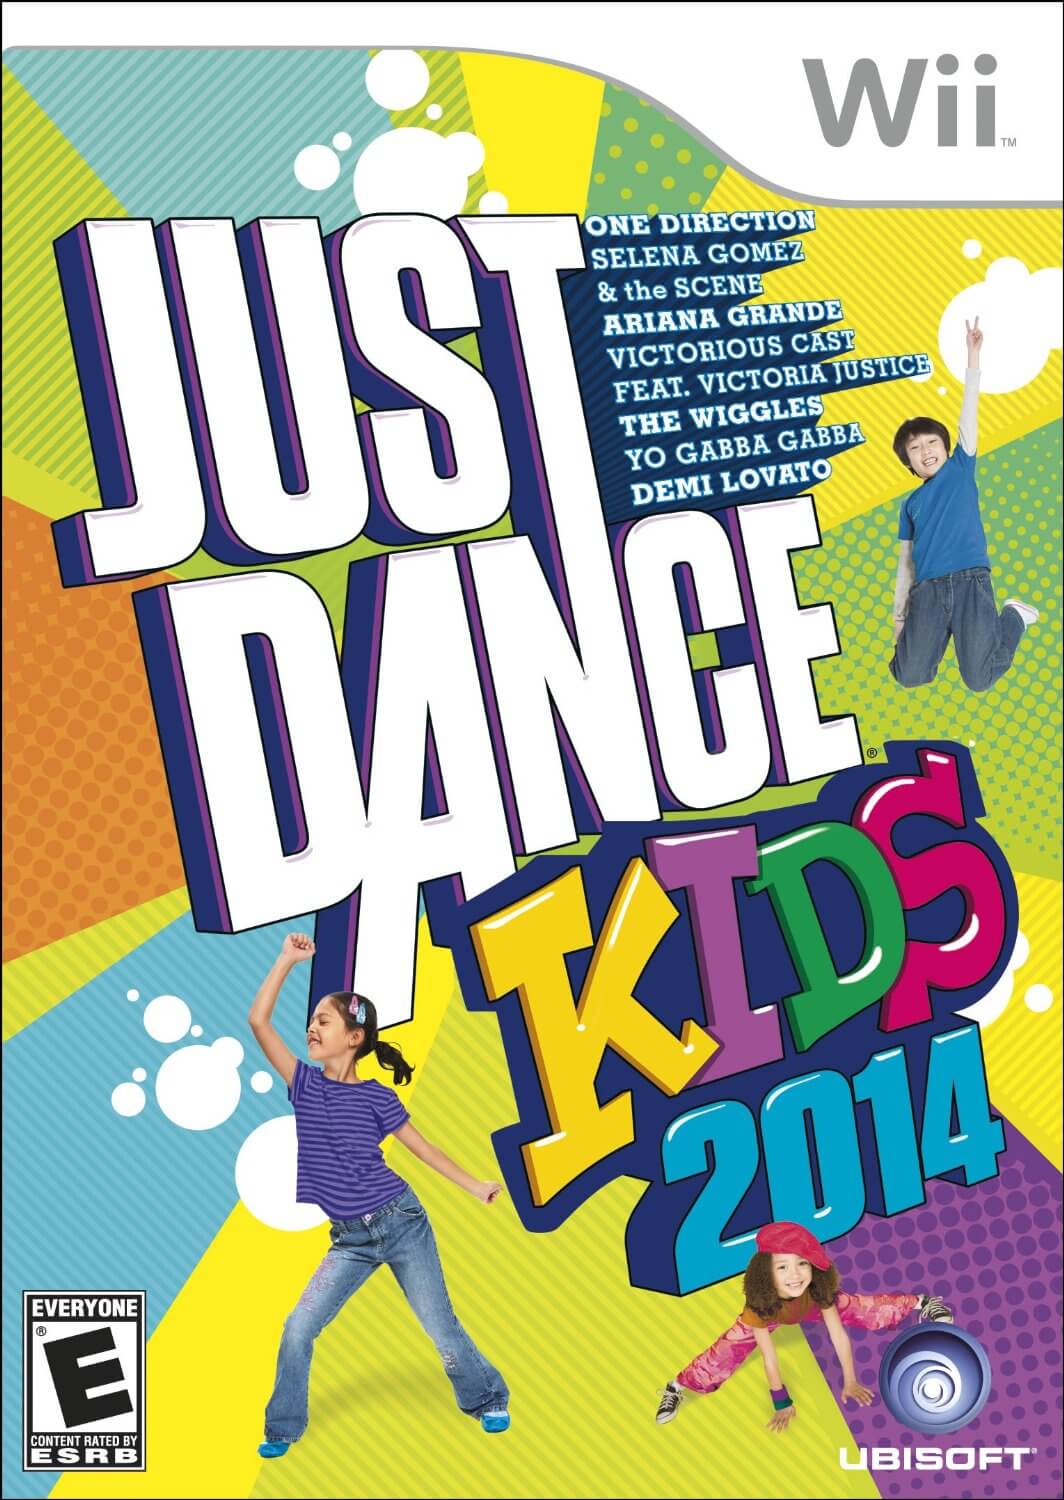 Just Dance: Kids 2014